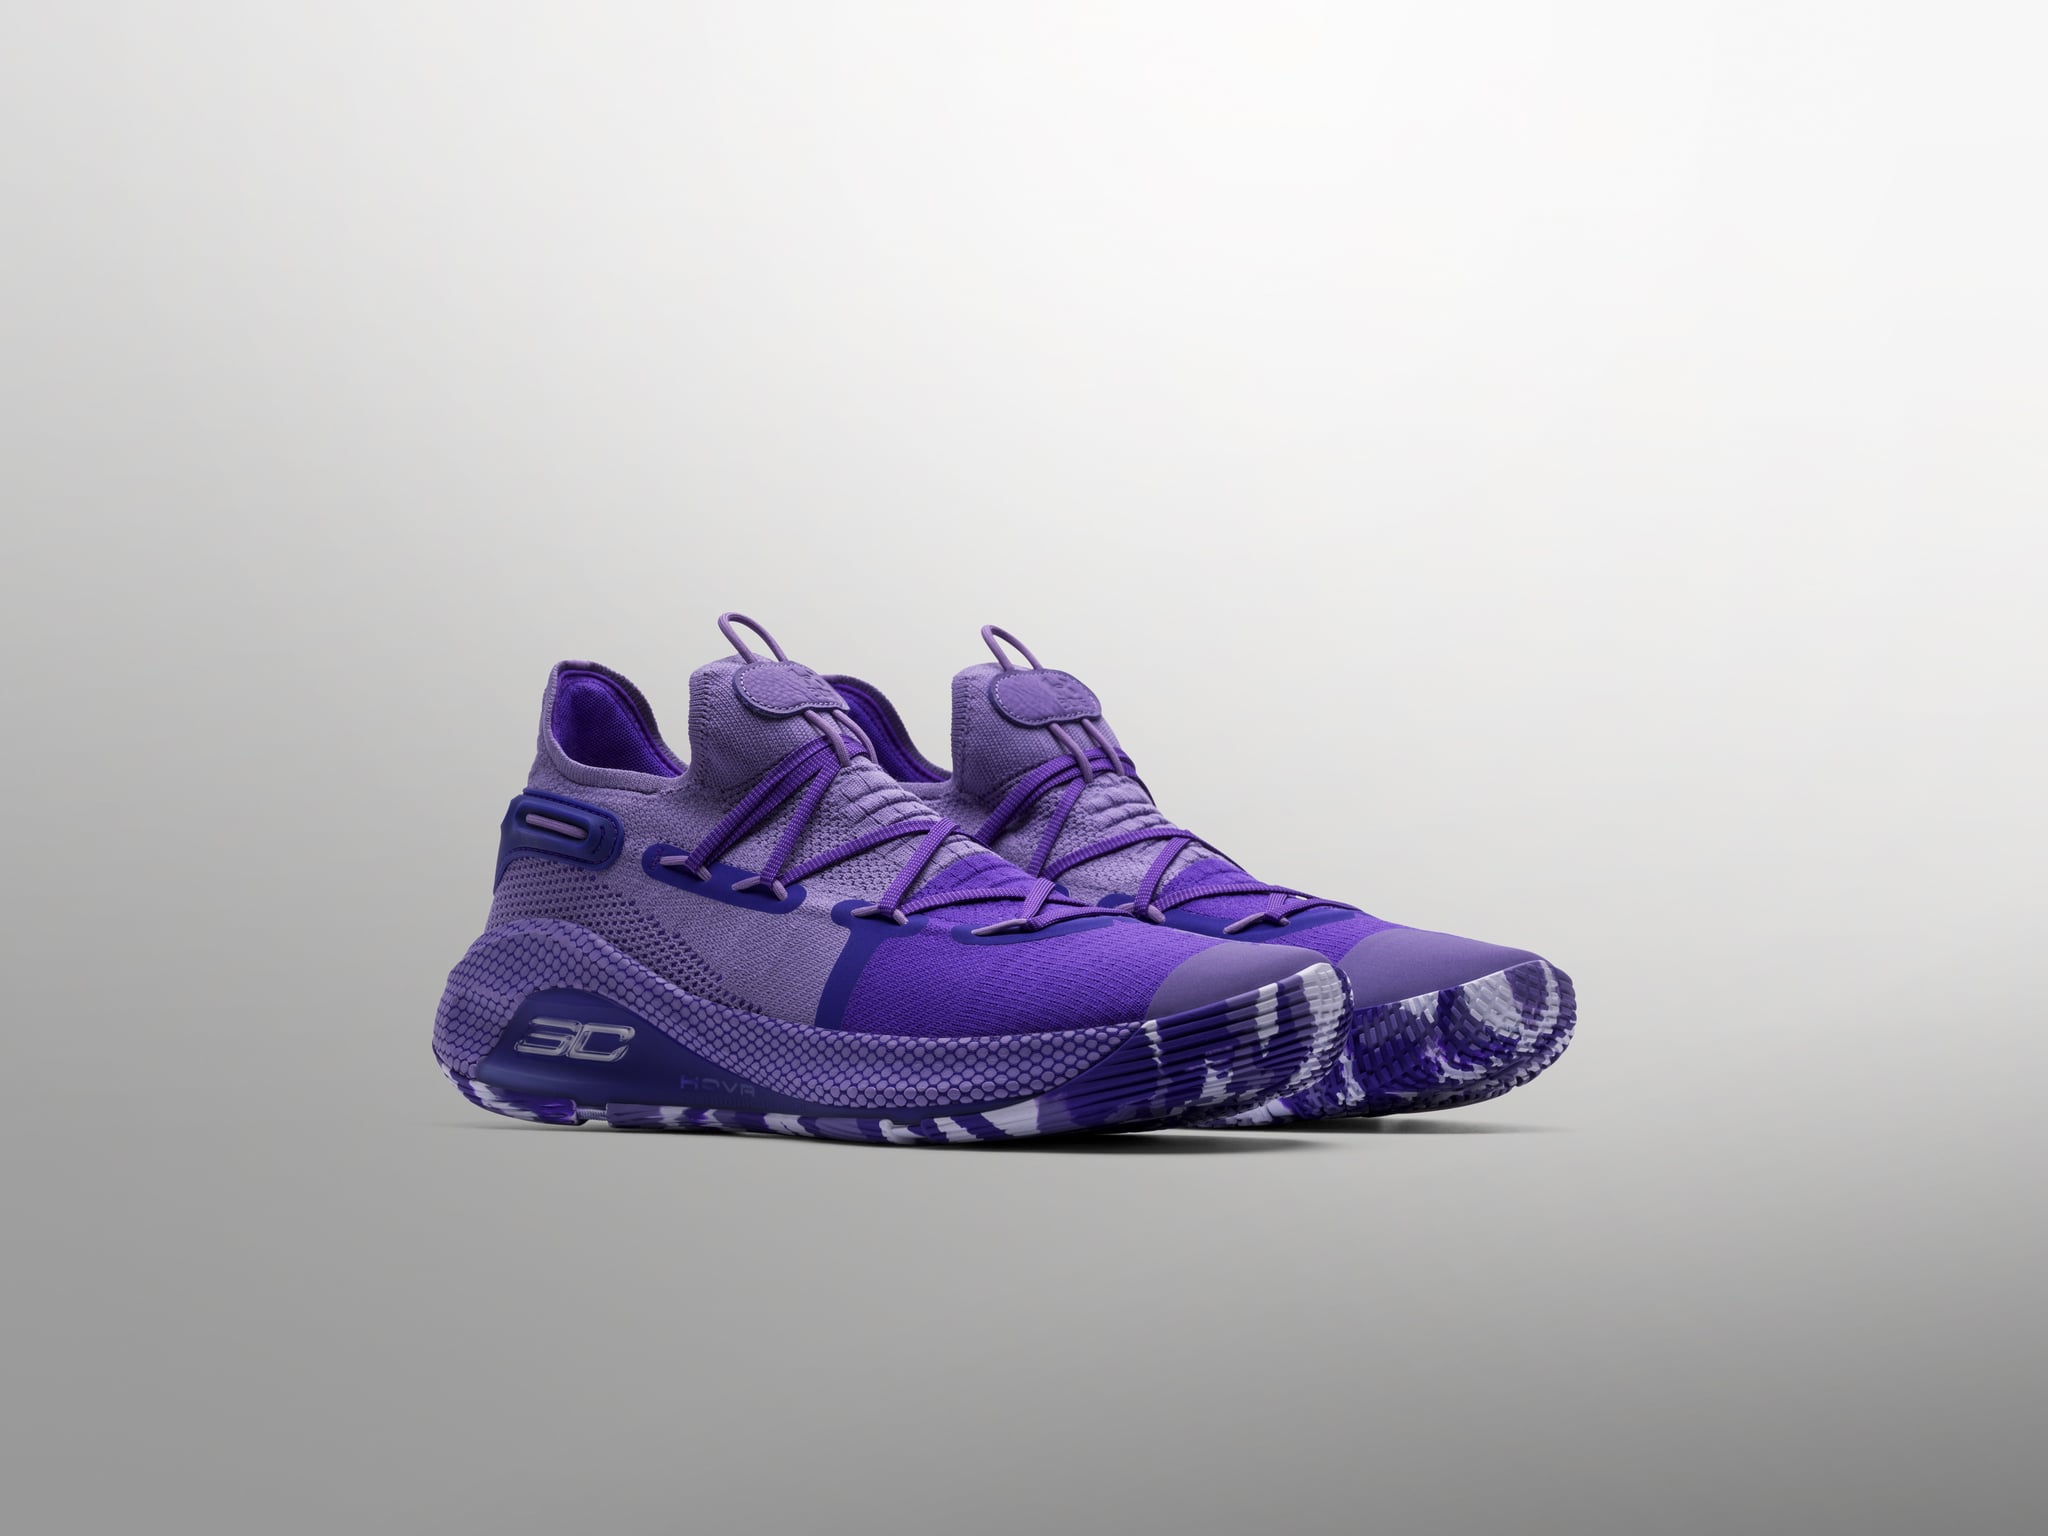 stephen curry purple sneakers